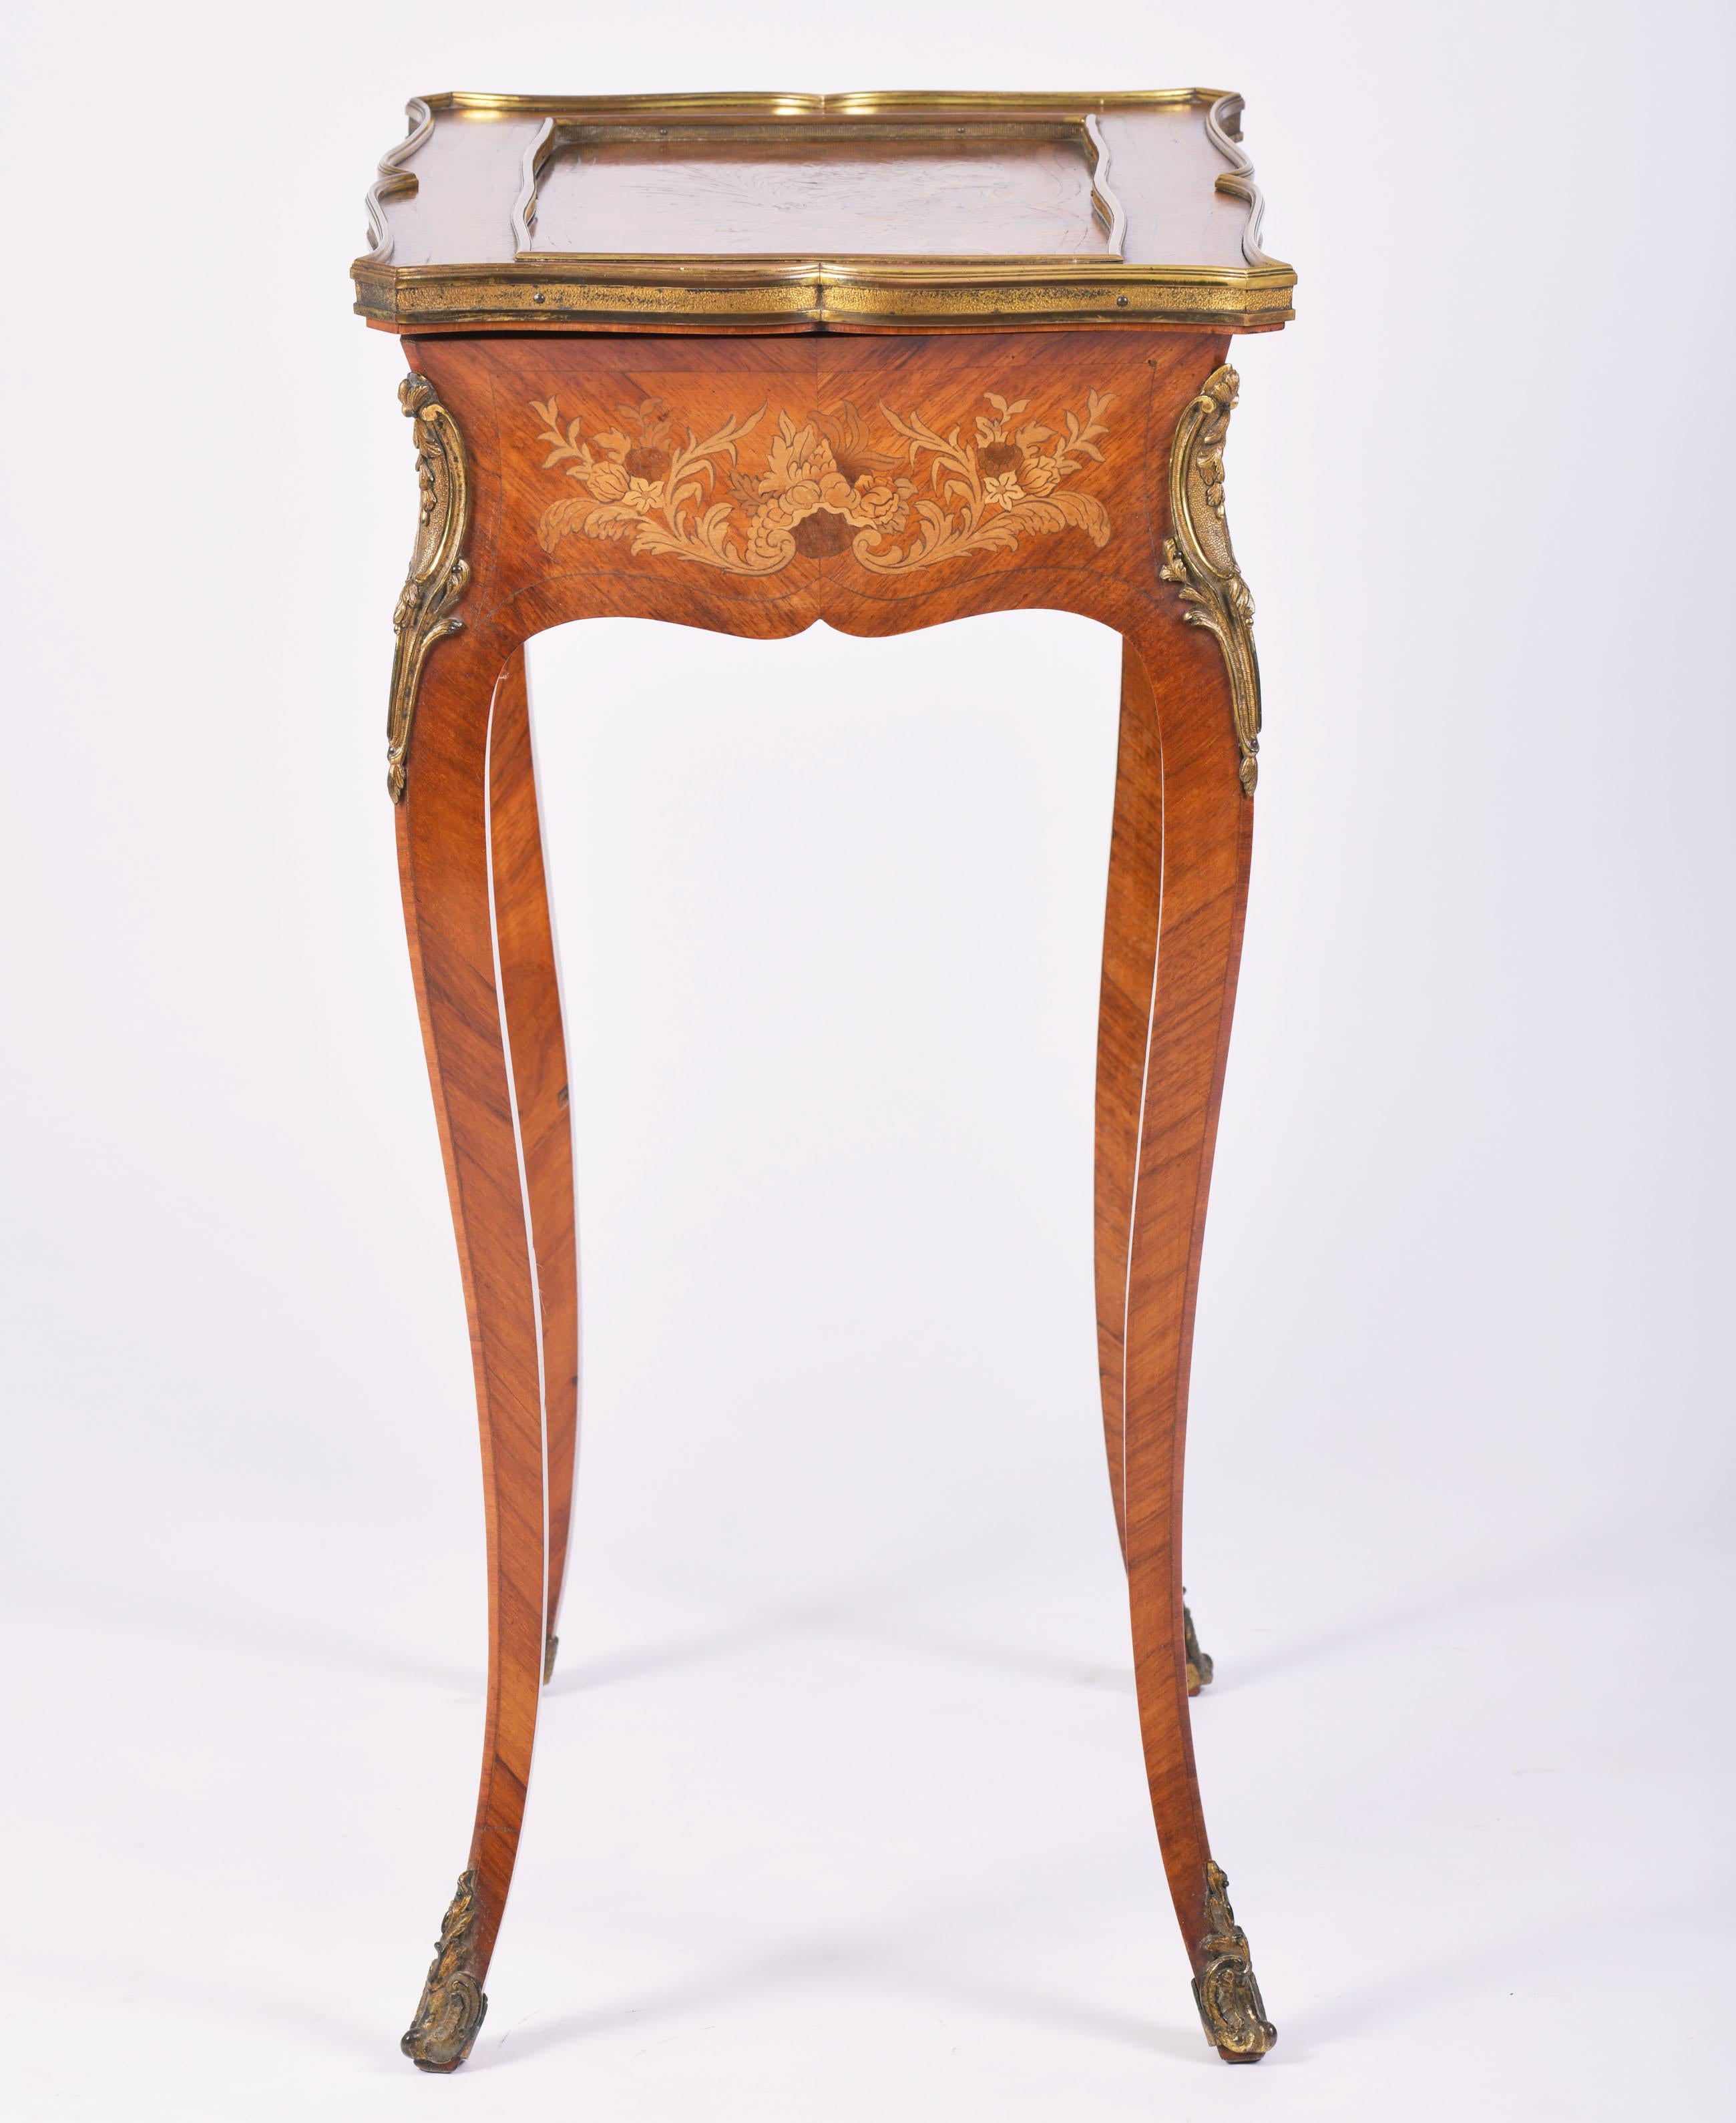 19th Century Kingwood Bijouterie Table with Ormolu Mounts 4